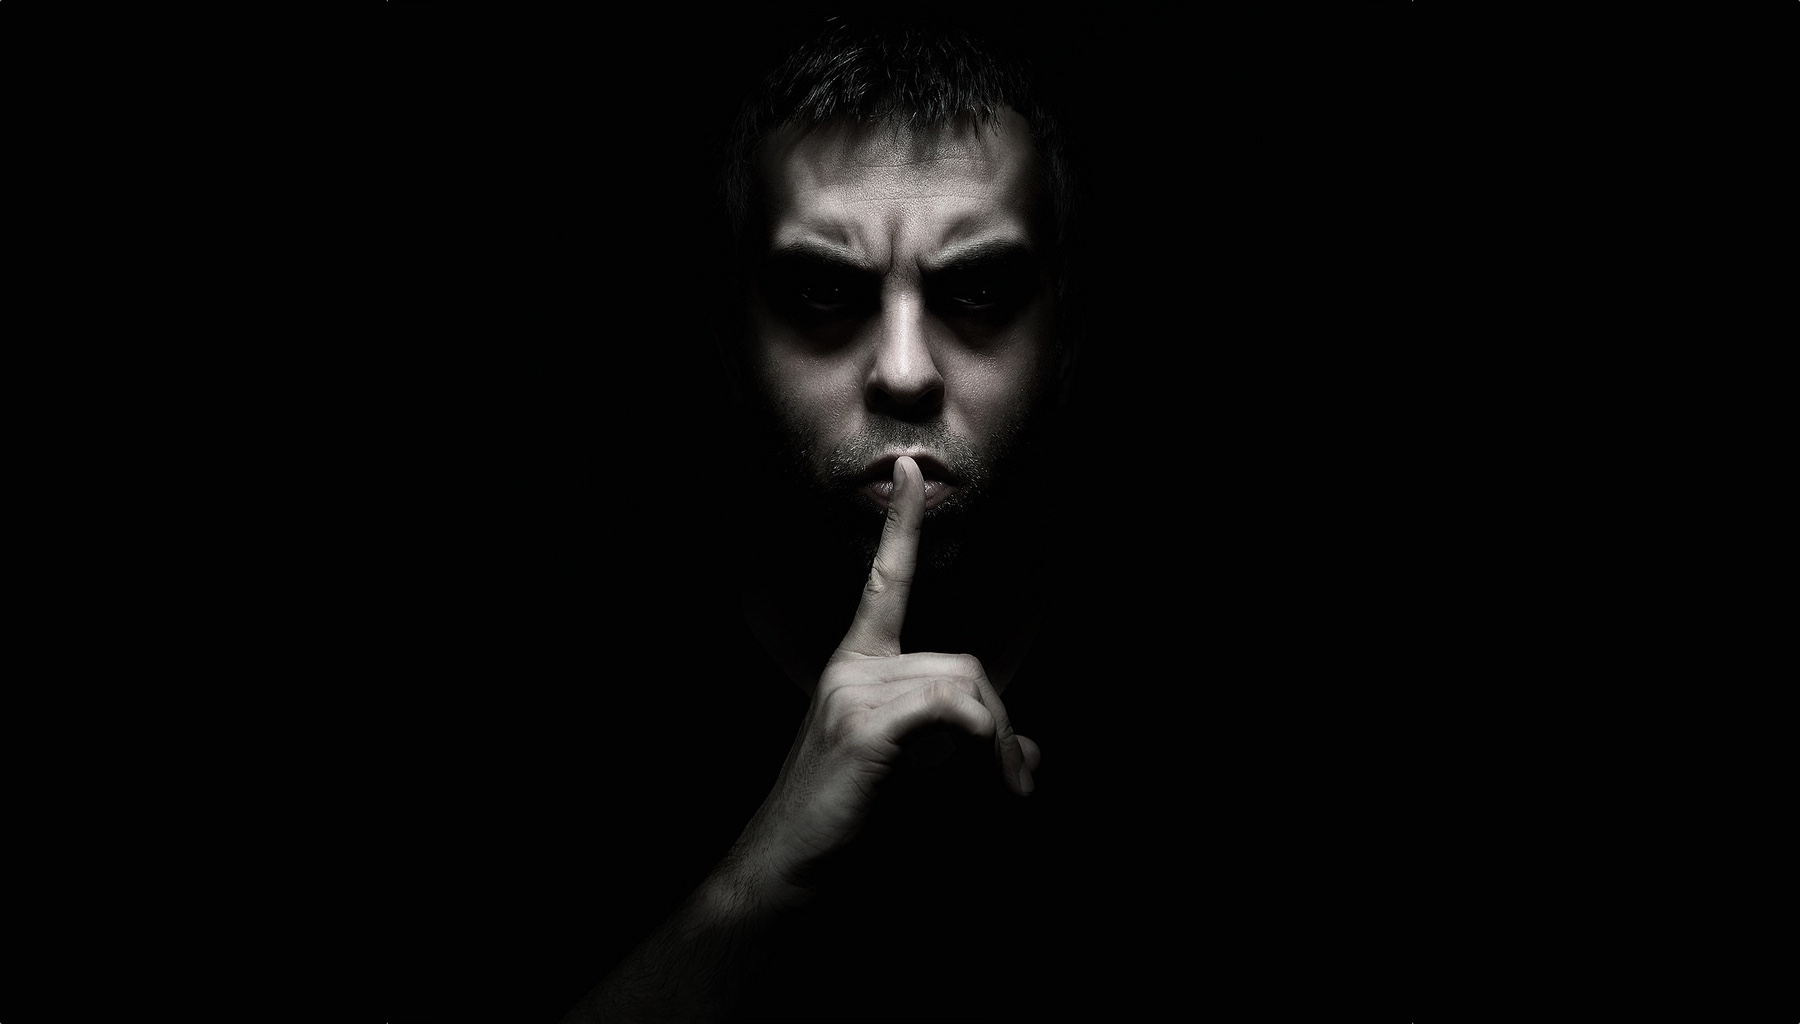 shhh privacy security dark